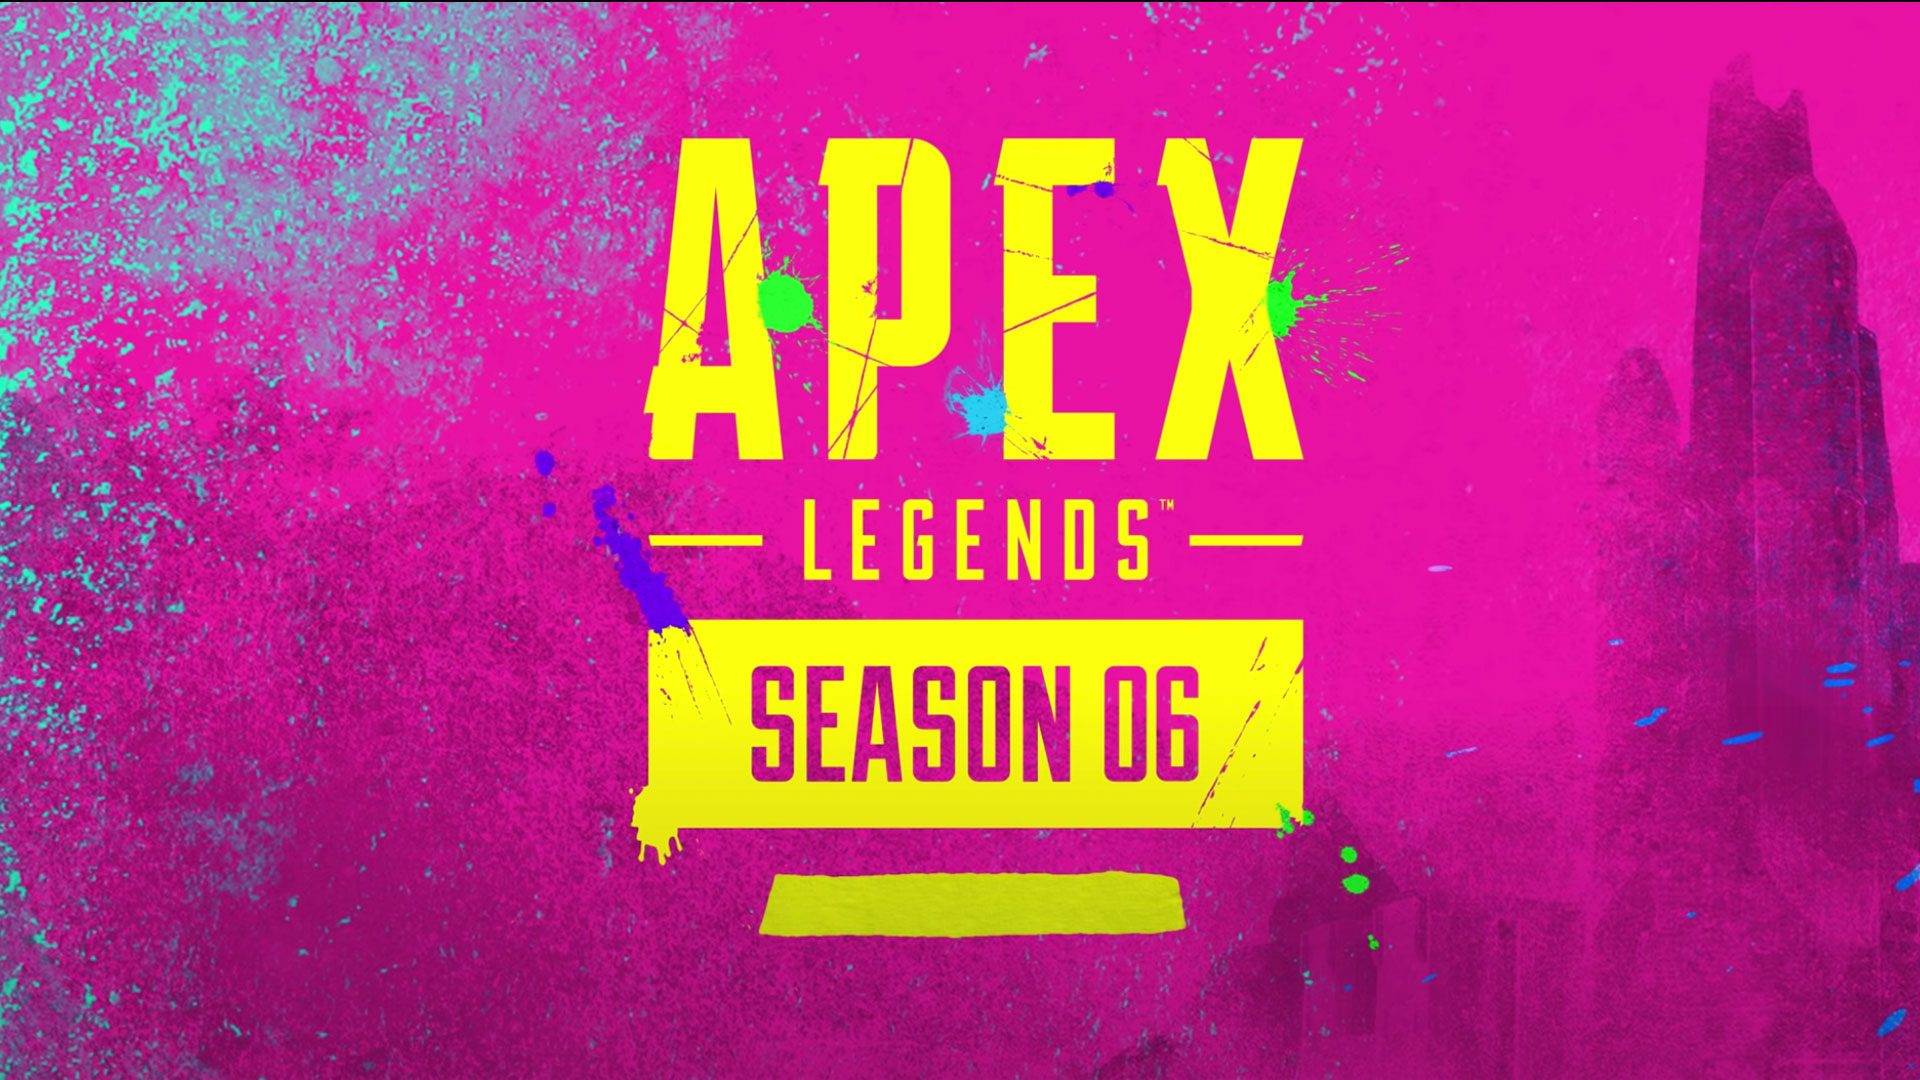 'Apex Legends' season six trailer teasers